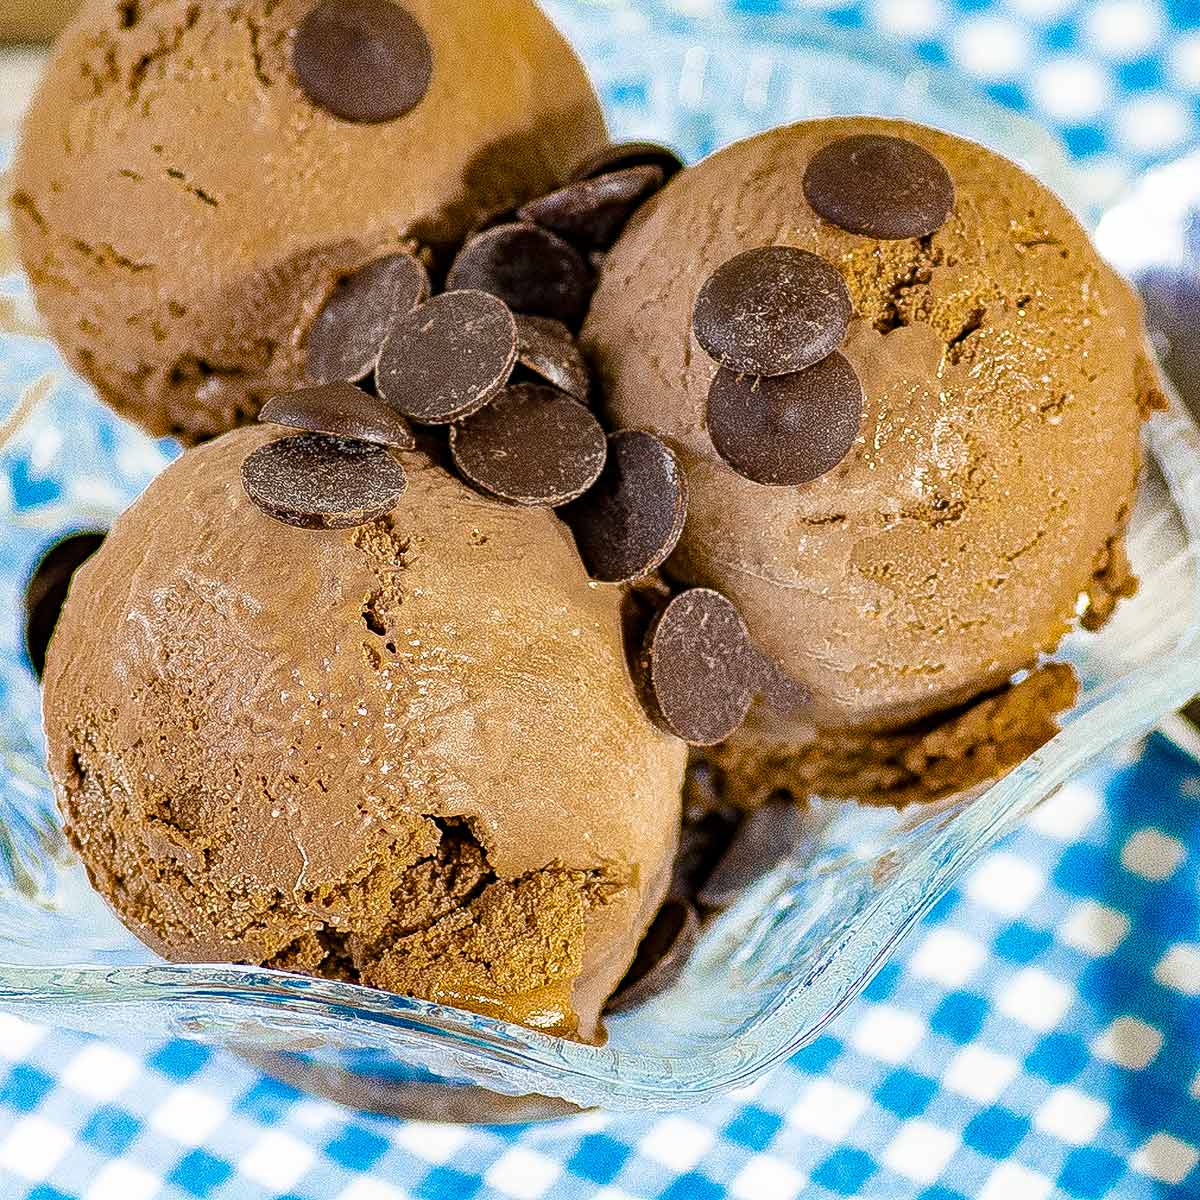 The Best Keto Chocolate Ice Cream Recipe